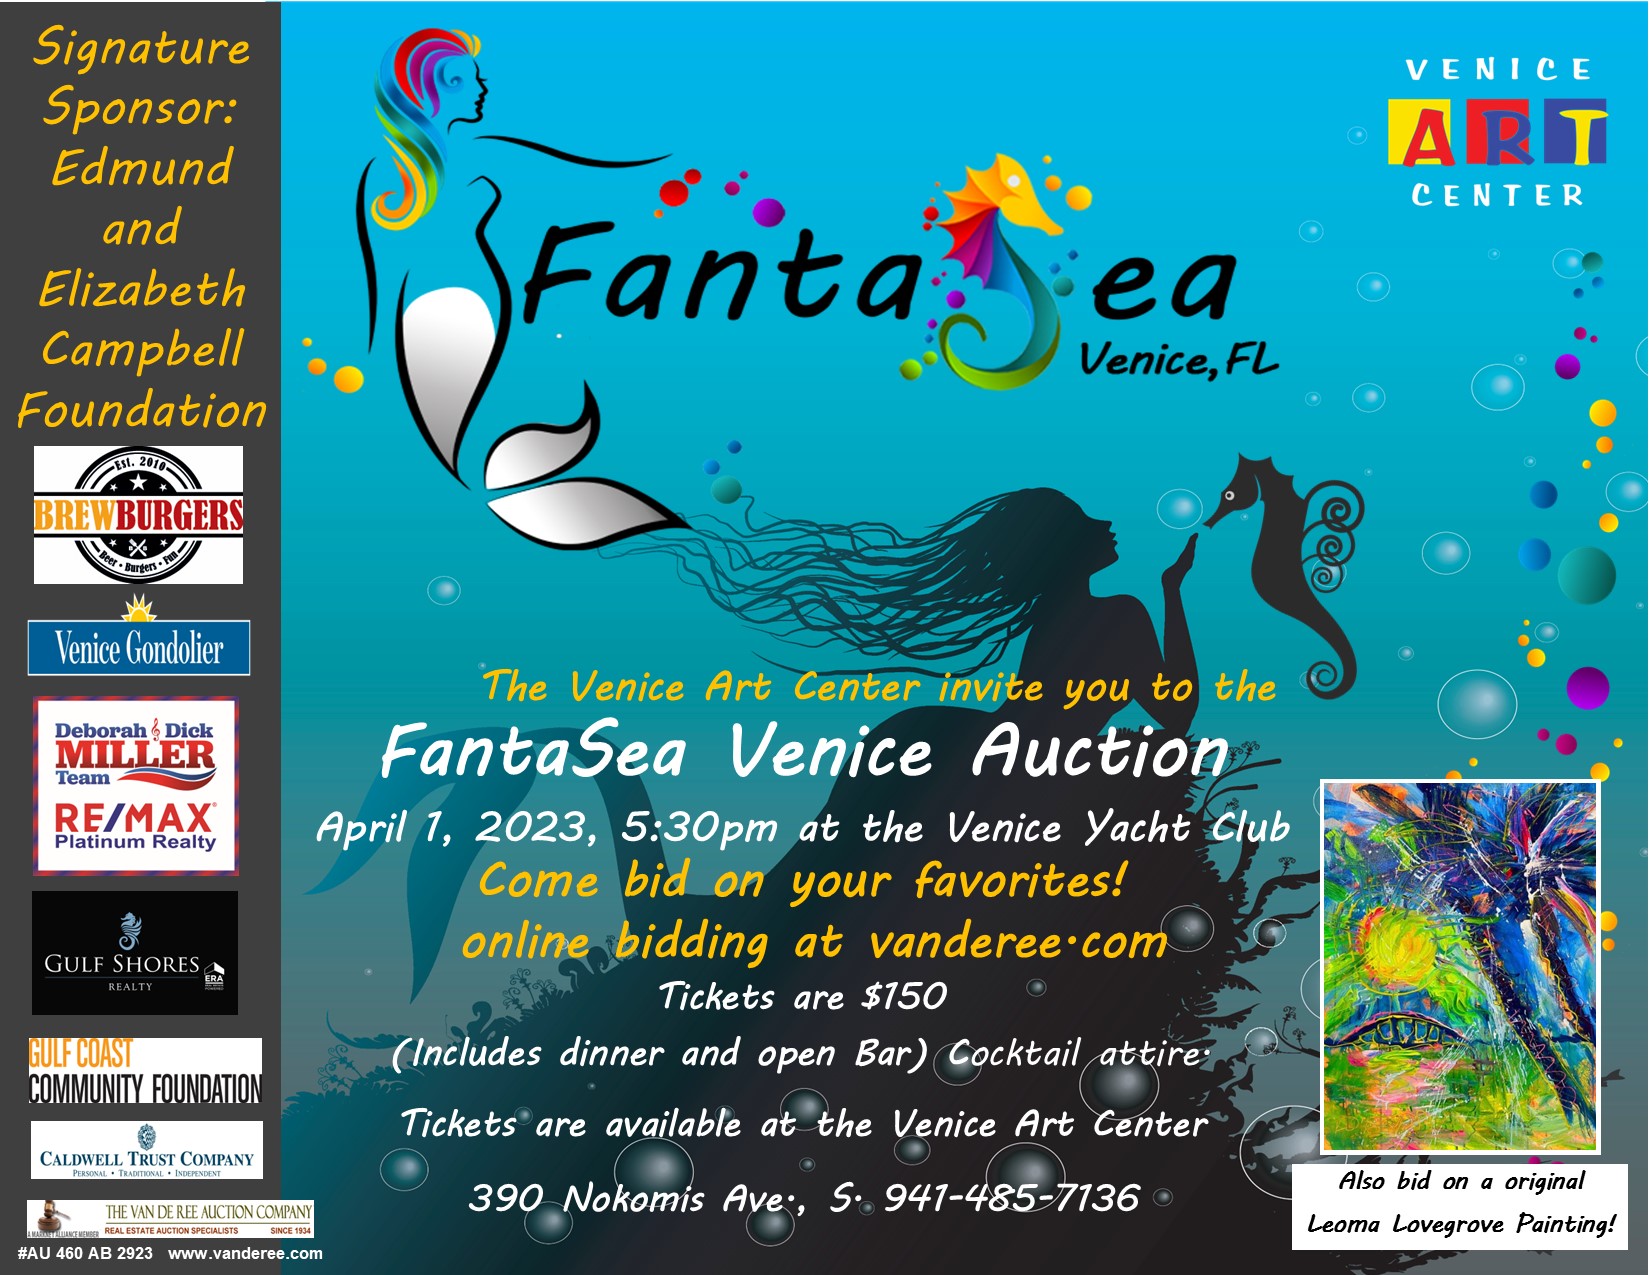 FantaSea Flyer online Auction Image 2023